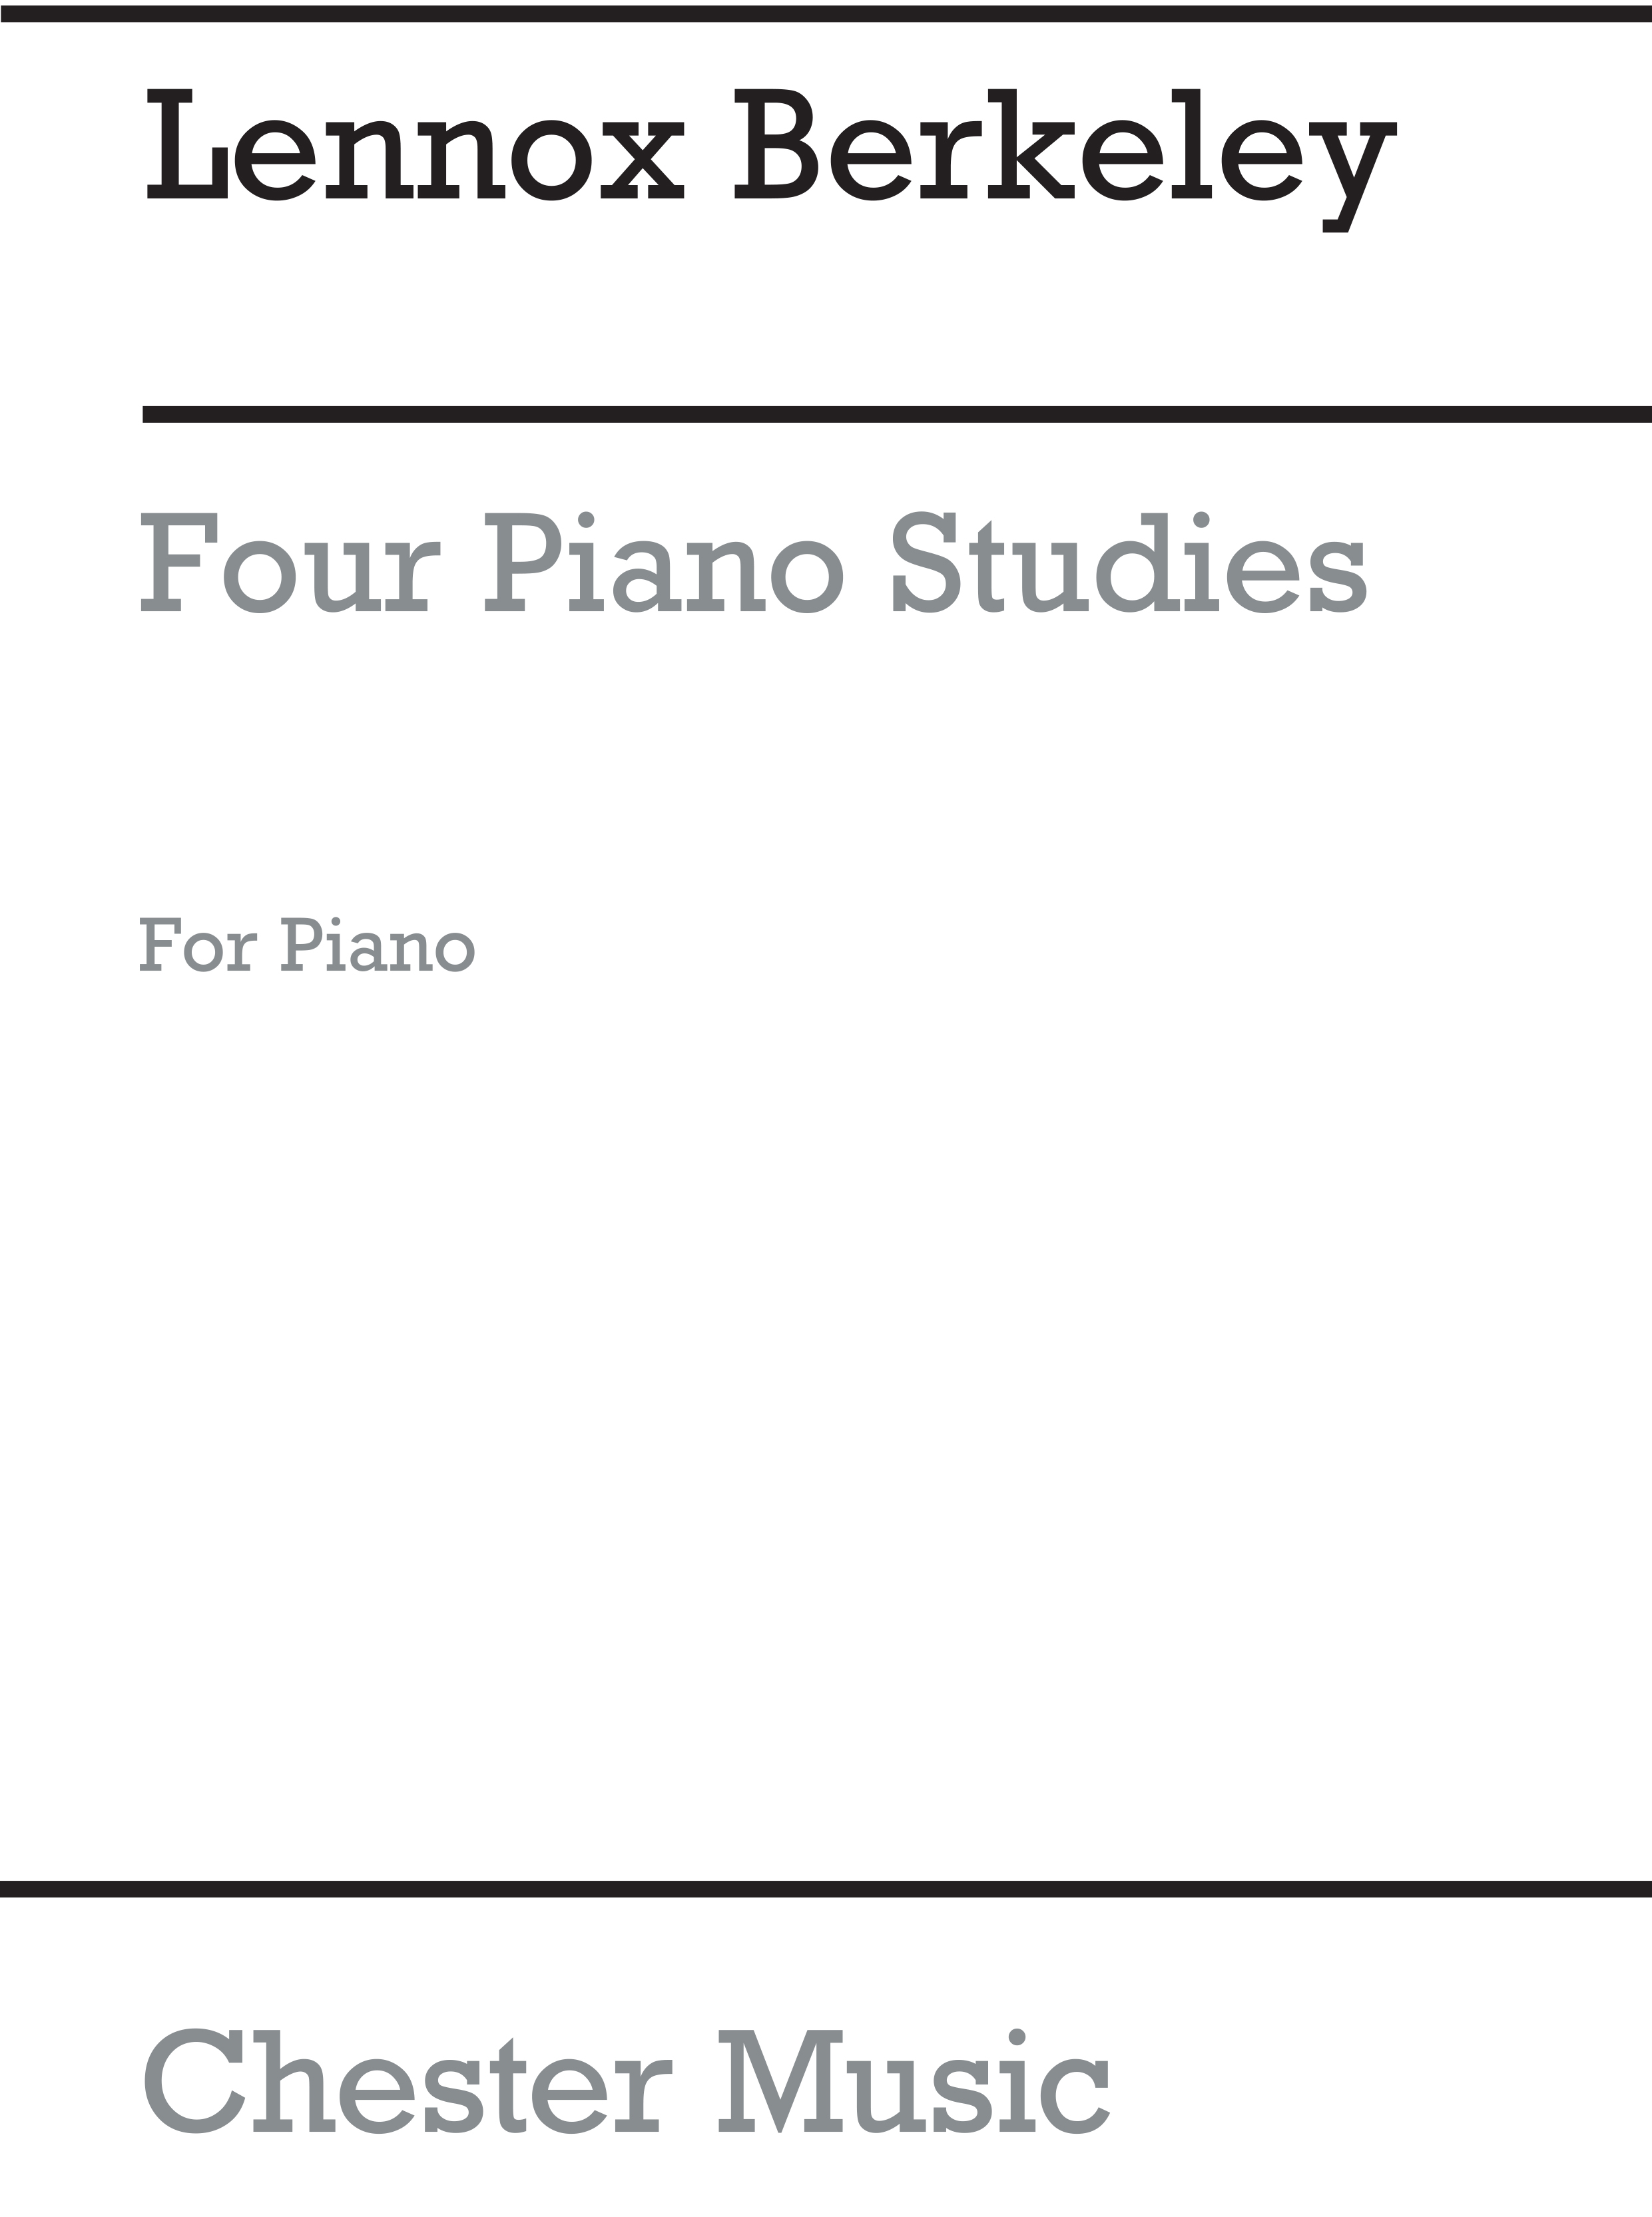 Lennox Berkeley: Four Piano Studies Op. 82: Piano: Study